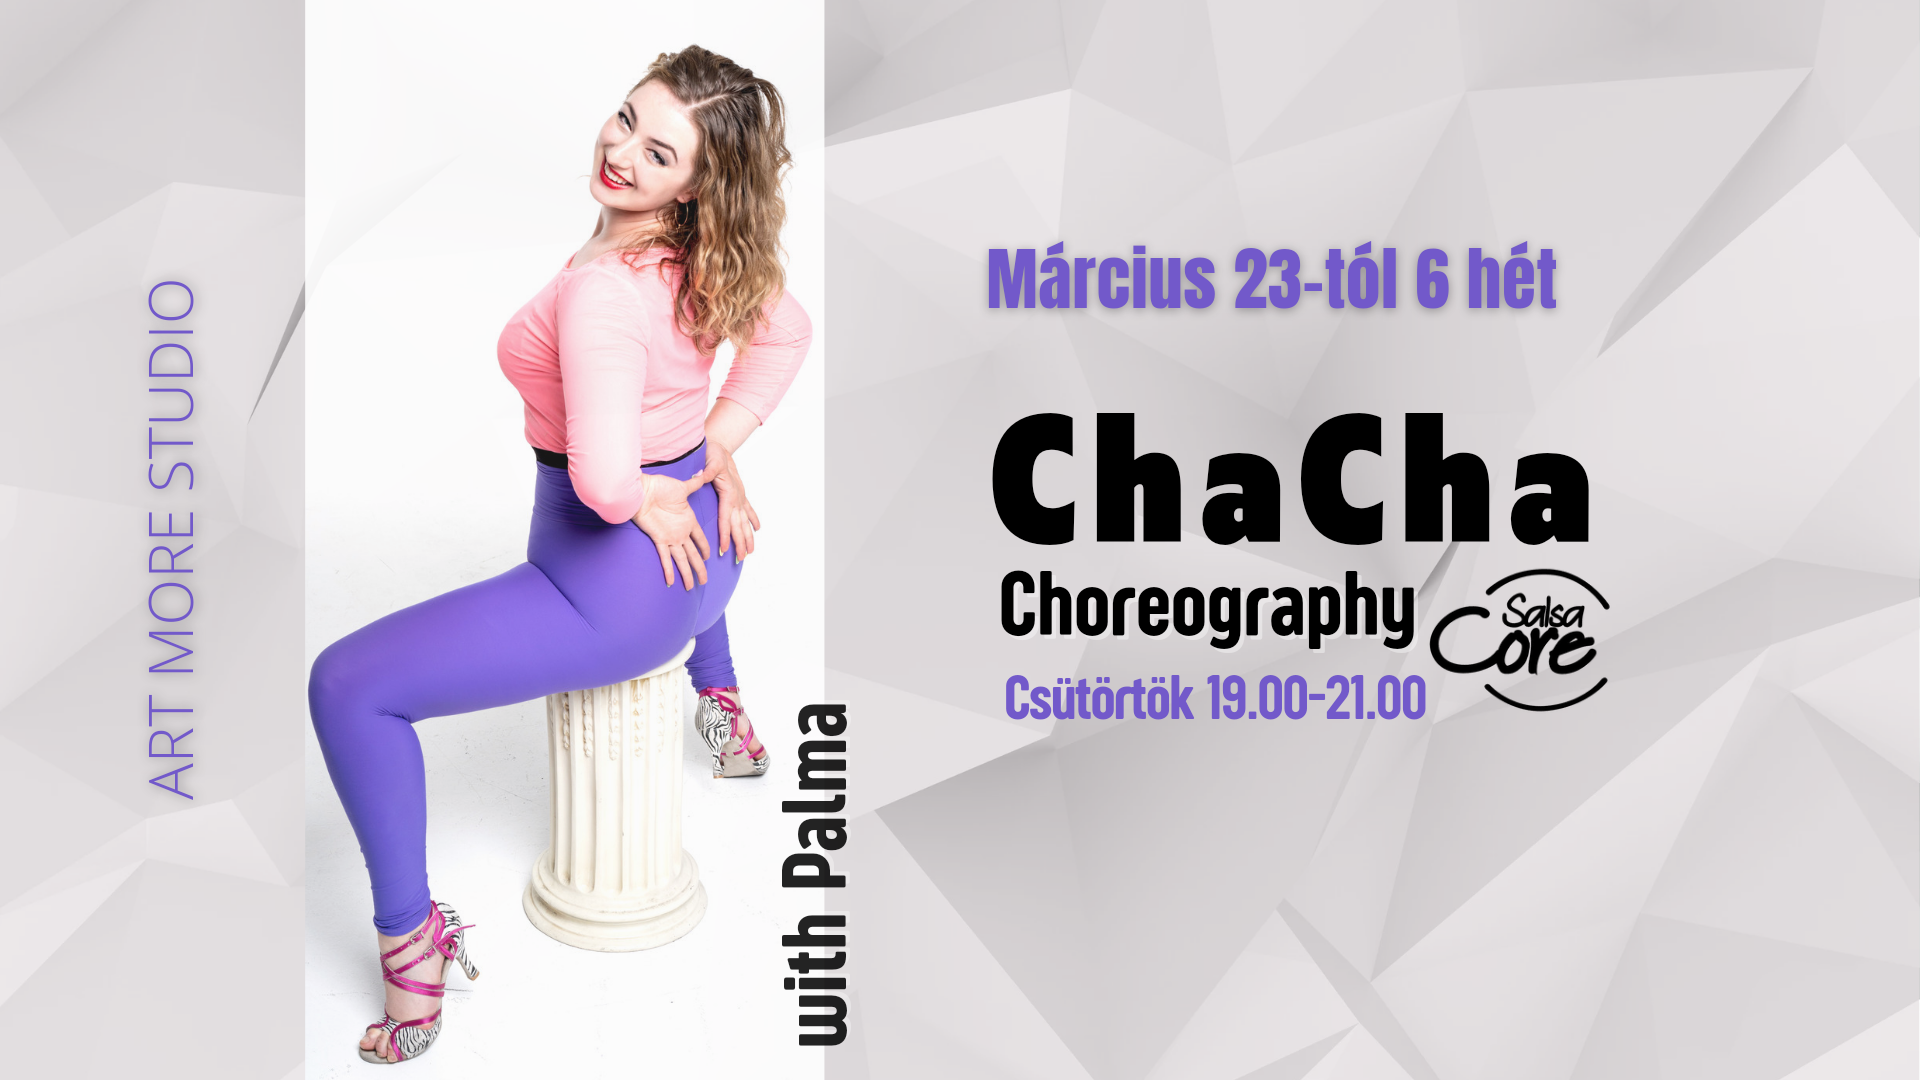 ChaCha footwork Choreography with Palma